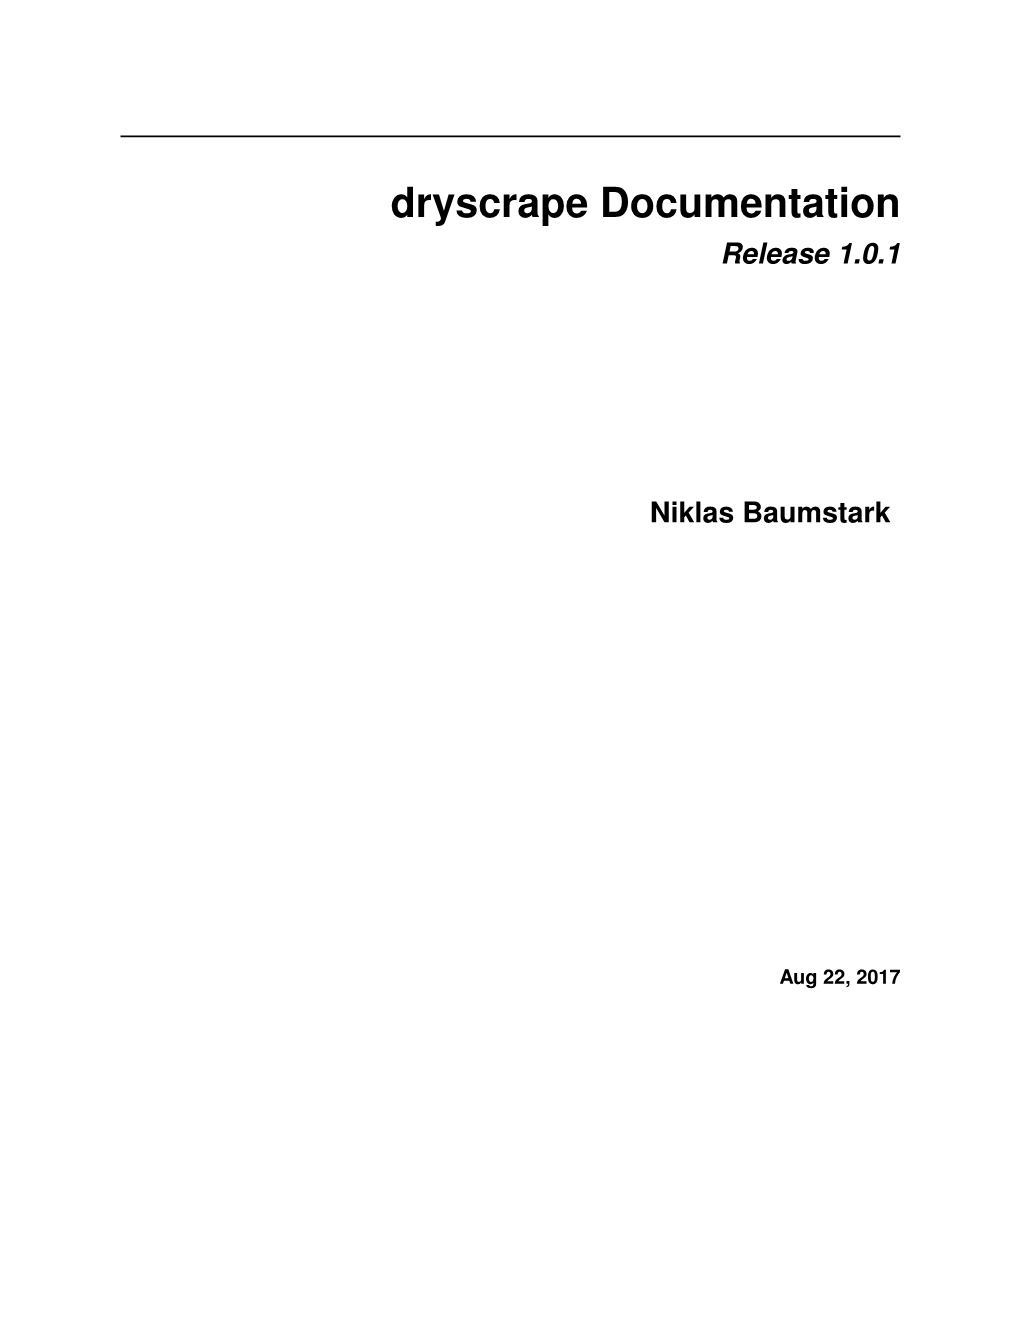 Dryscrape Documentation Release 1.0.1